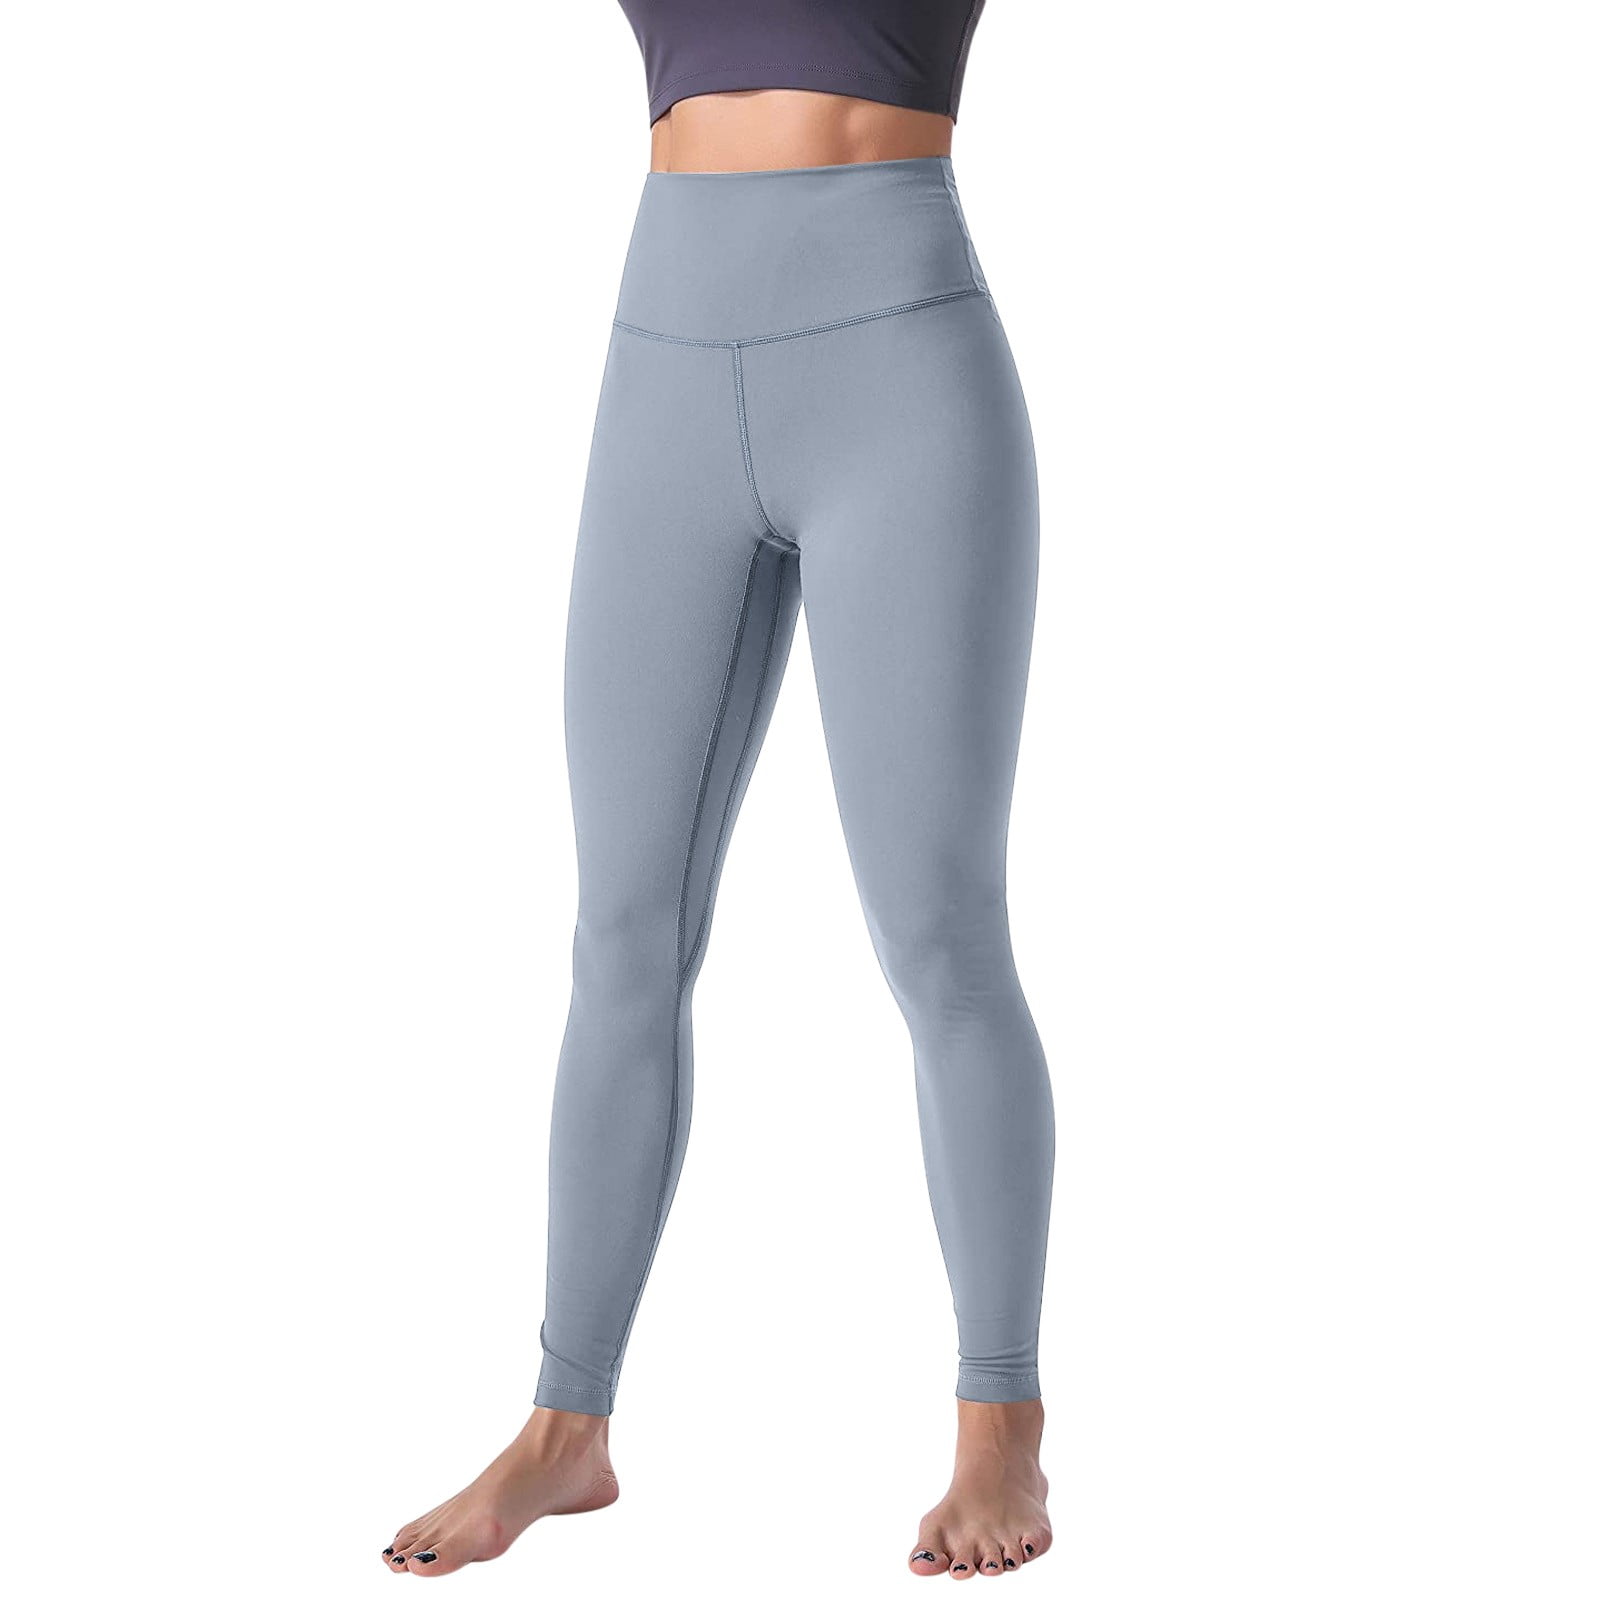 fvwitlyh Cute Yoga Pants for Teen Girls Fitness Slim Solid Leggings